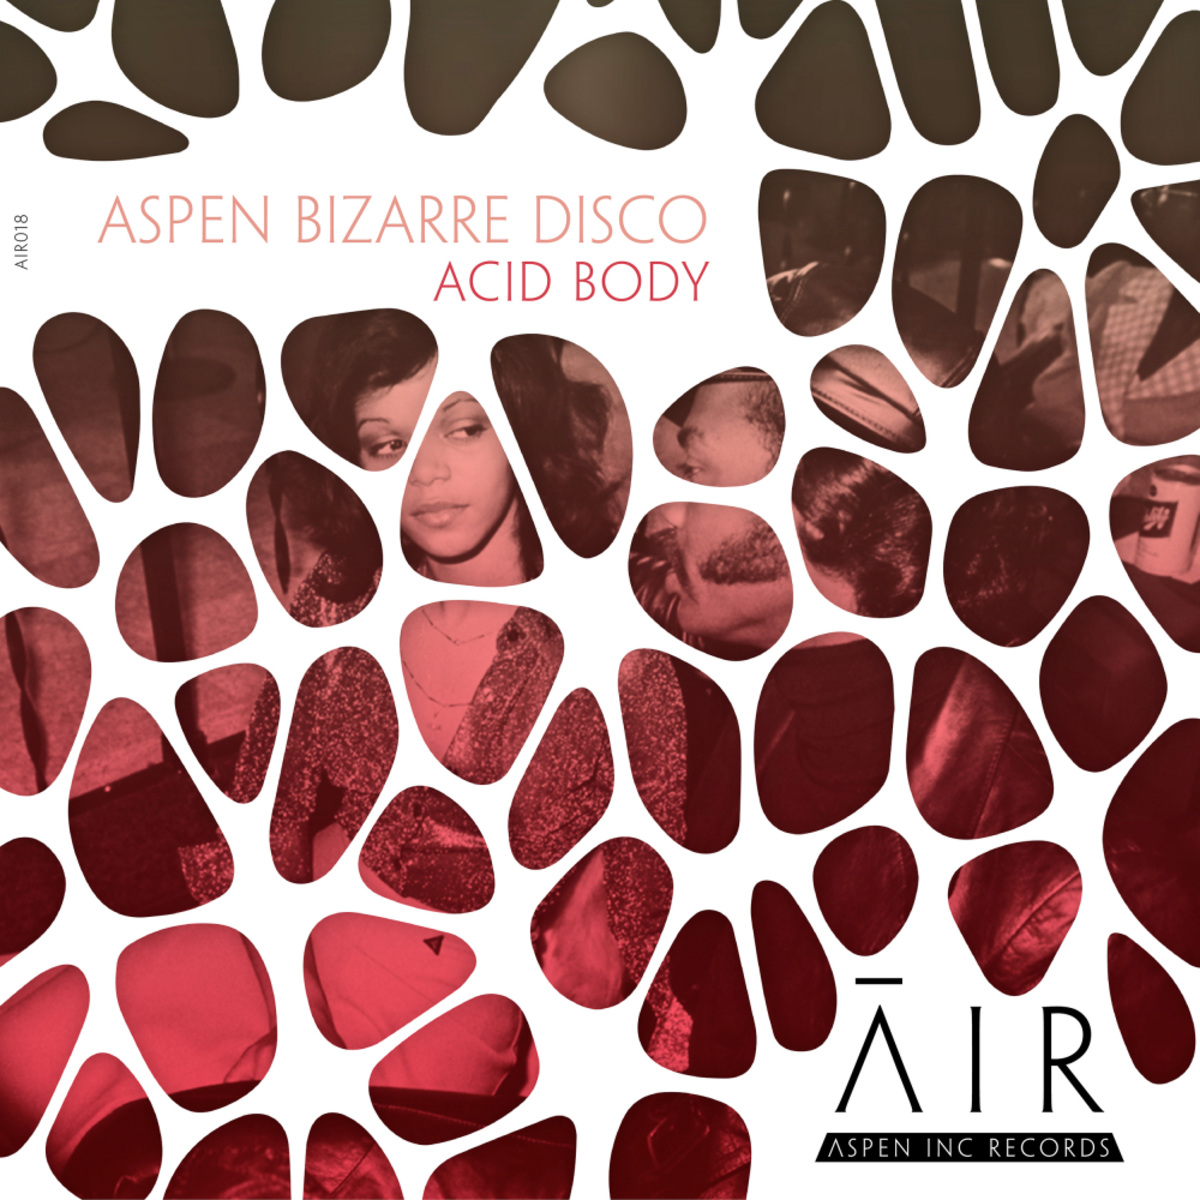 aspen bizarre disco - Acid Body / Aspen Inc Records